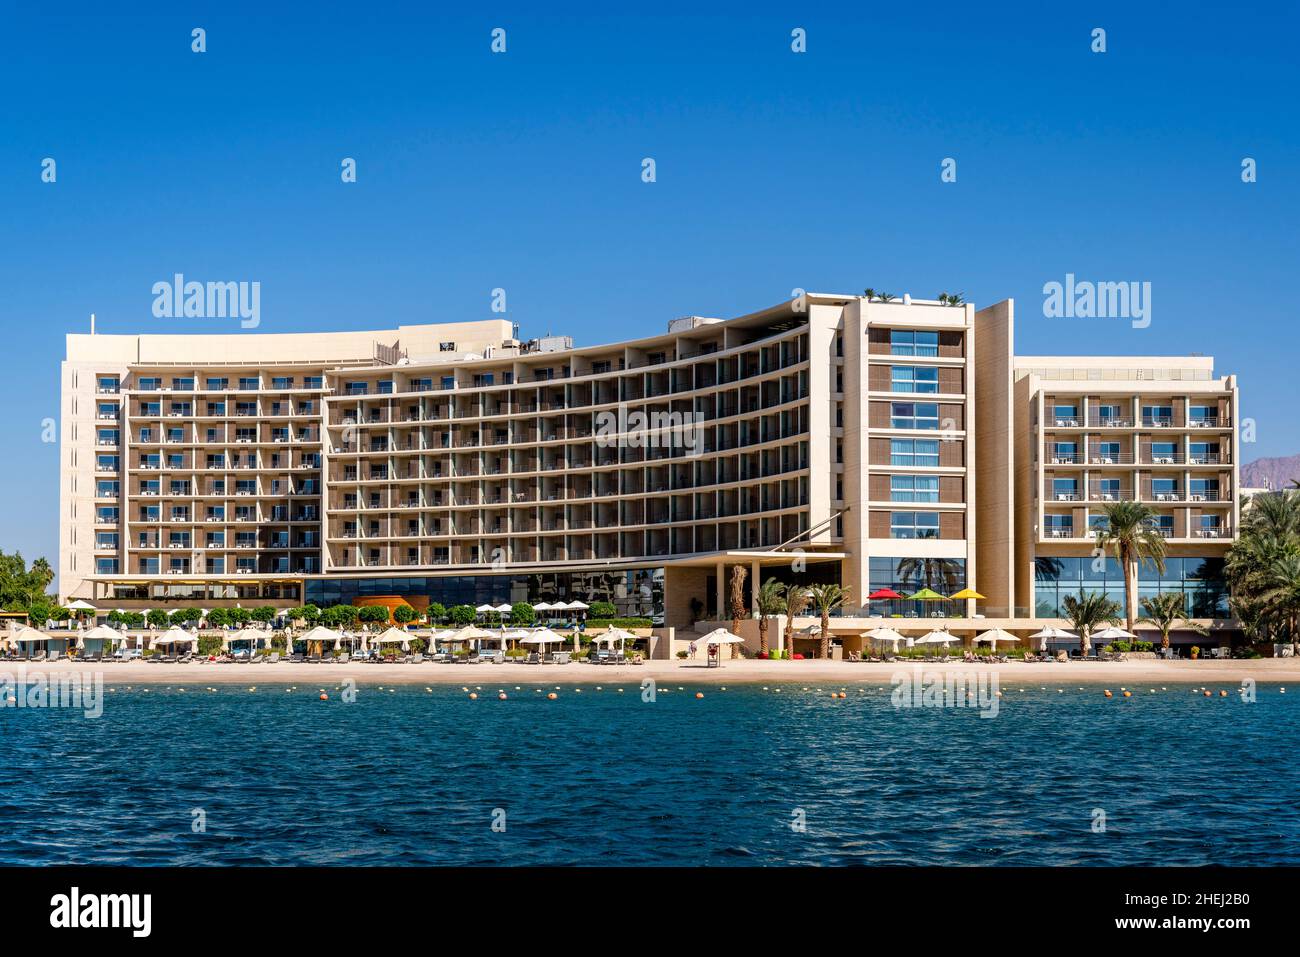 A View Of The Kempinski Hotel From The Gulf of Aqaba, Aqaba, Aqaba  Governorate, Jordan Stock Photo - Alamy